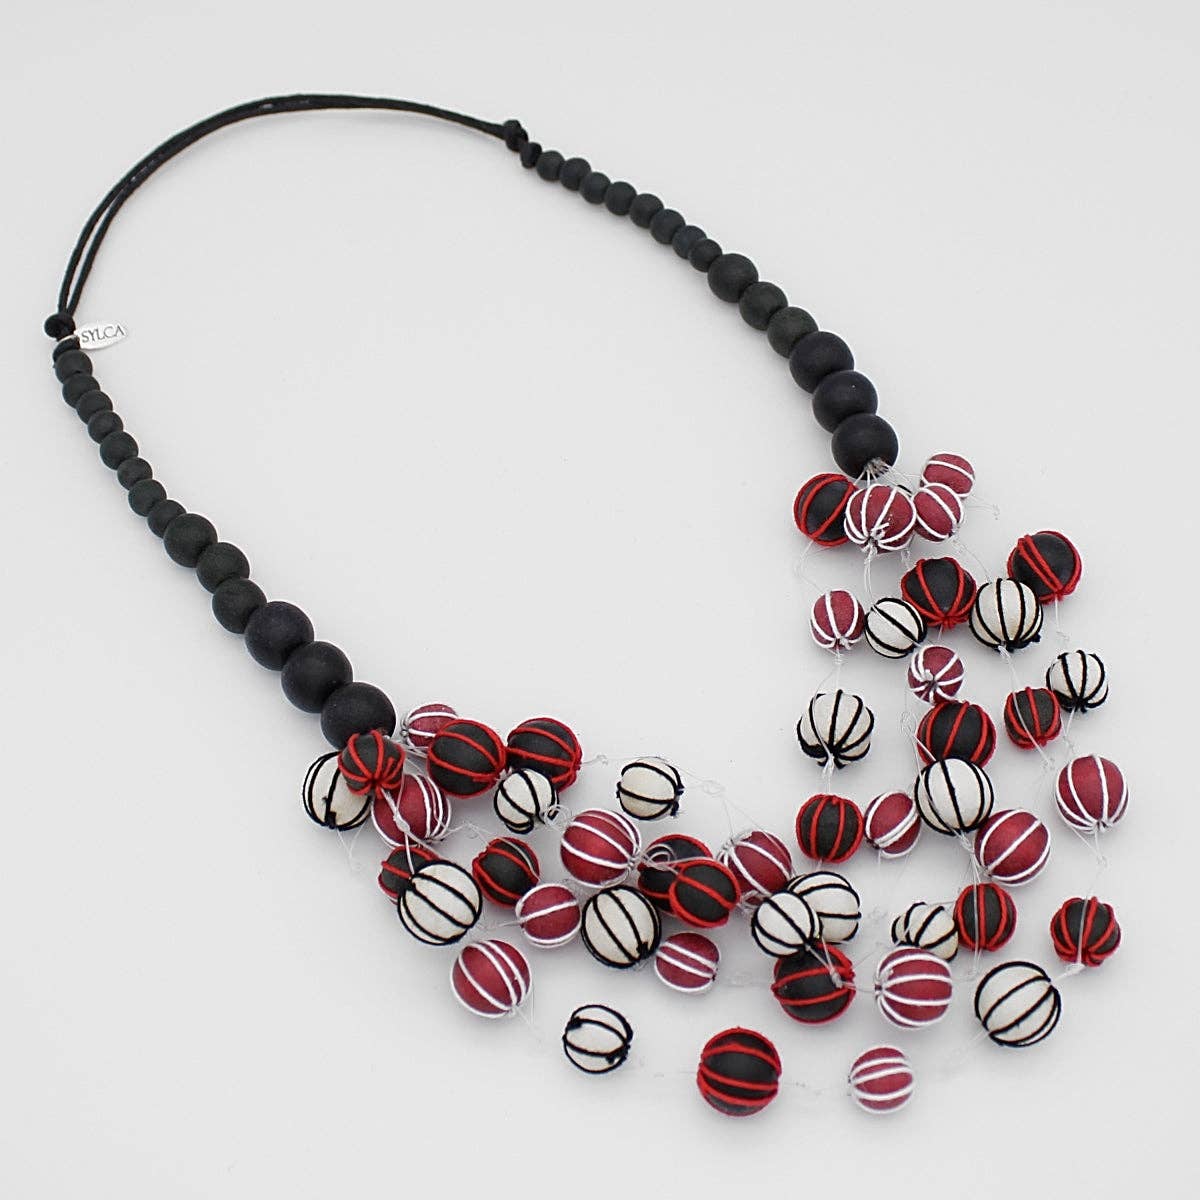 Sylca Designs - Red Ada Necklace